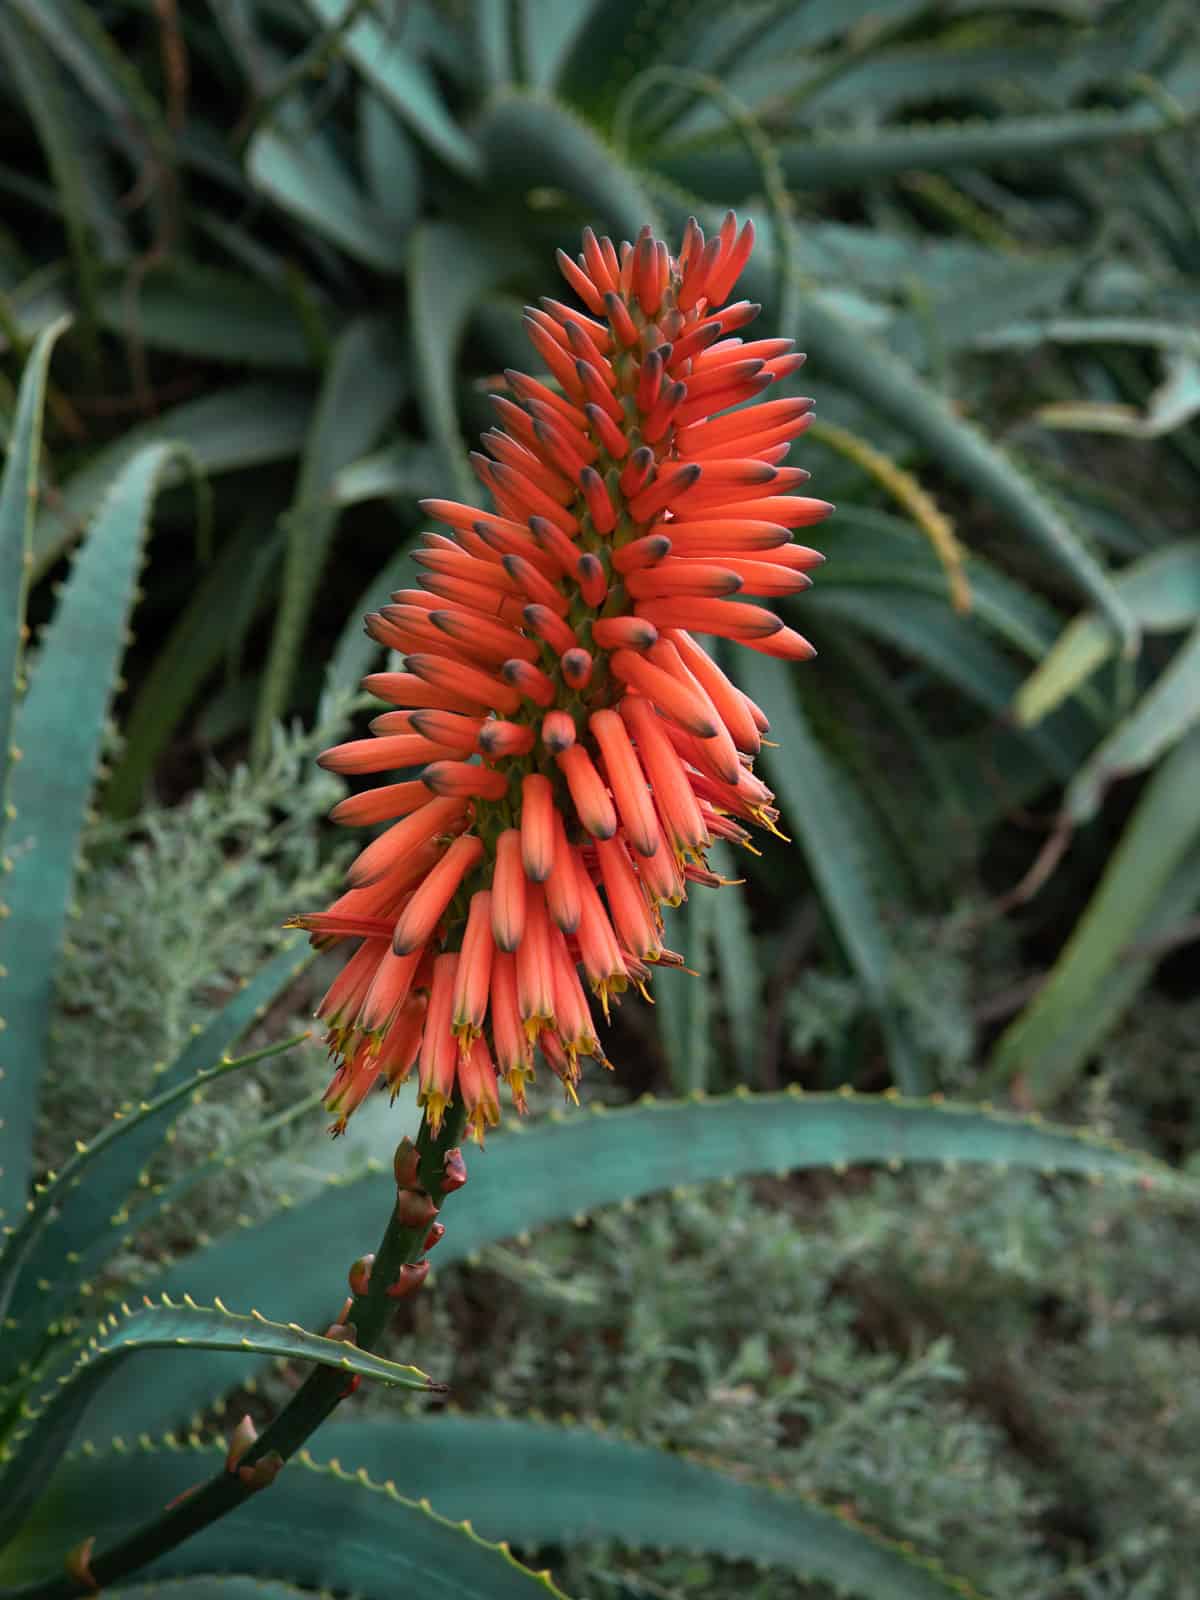 Blooming bright orange colors of a Cape Aloe plant